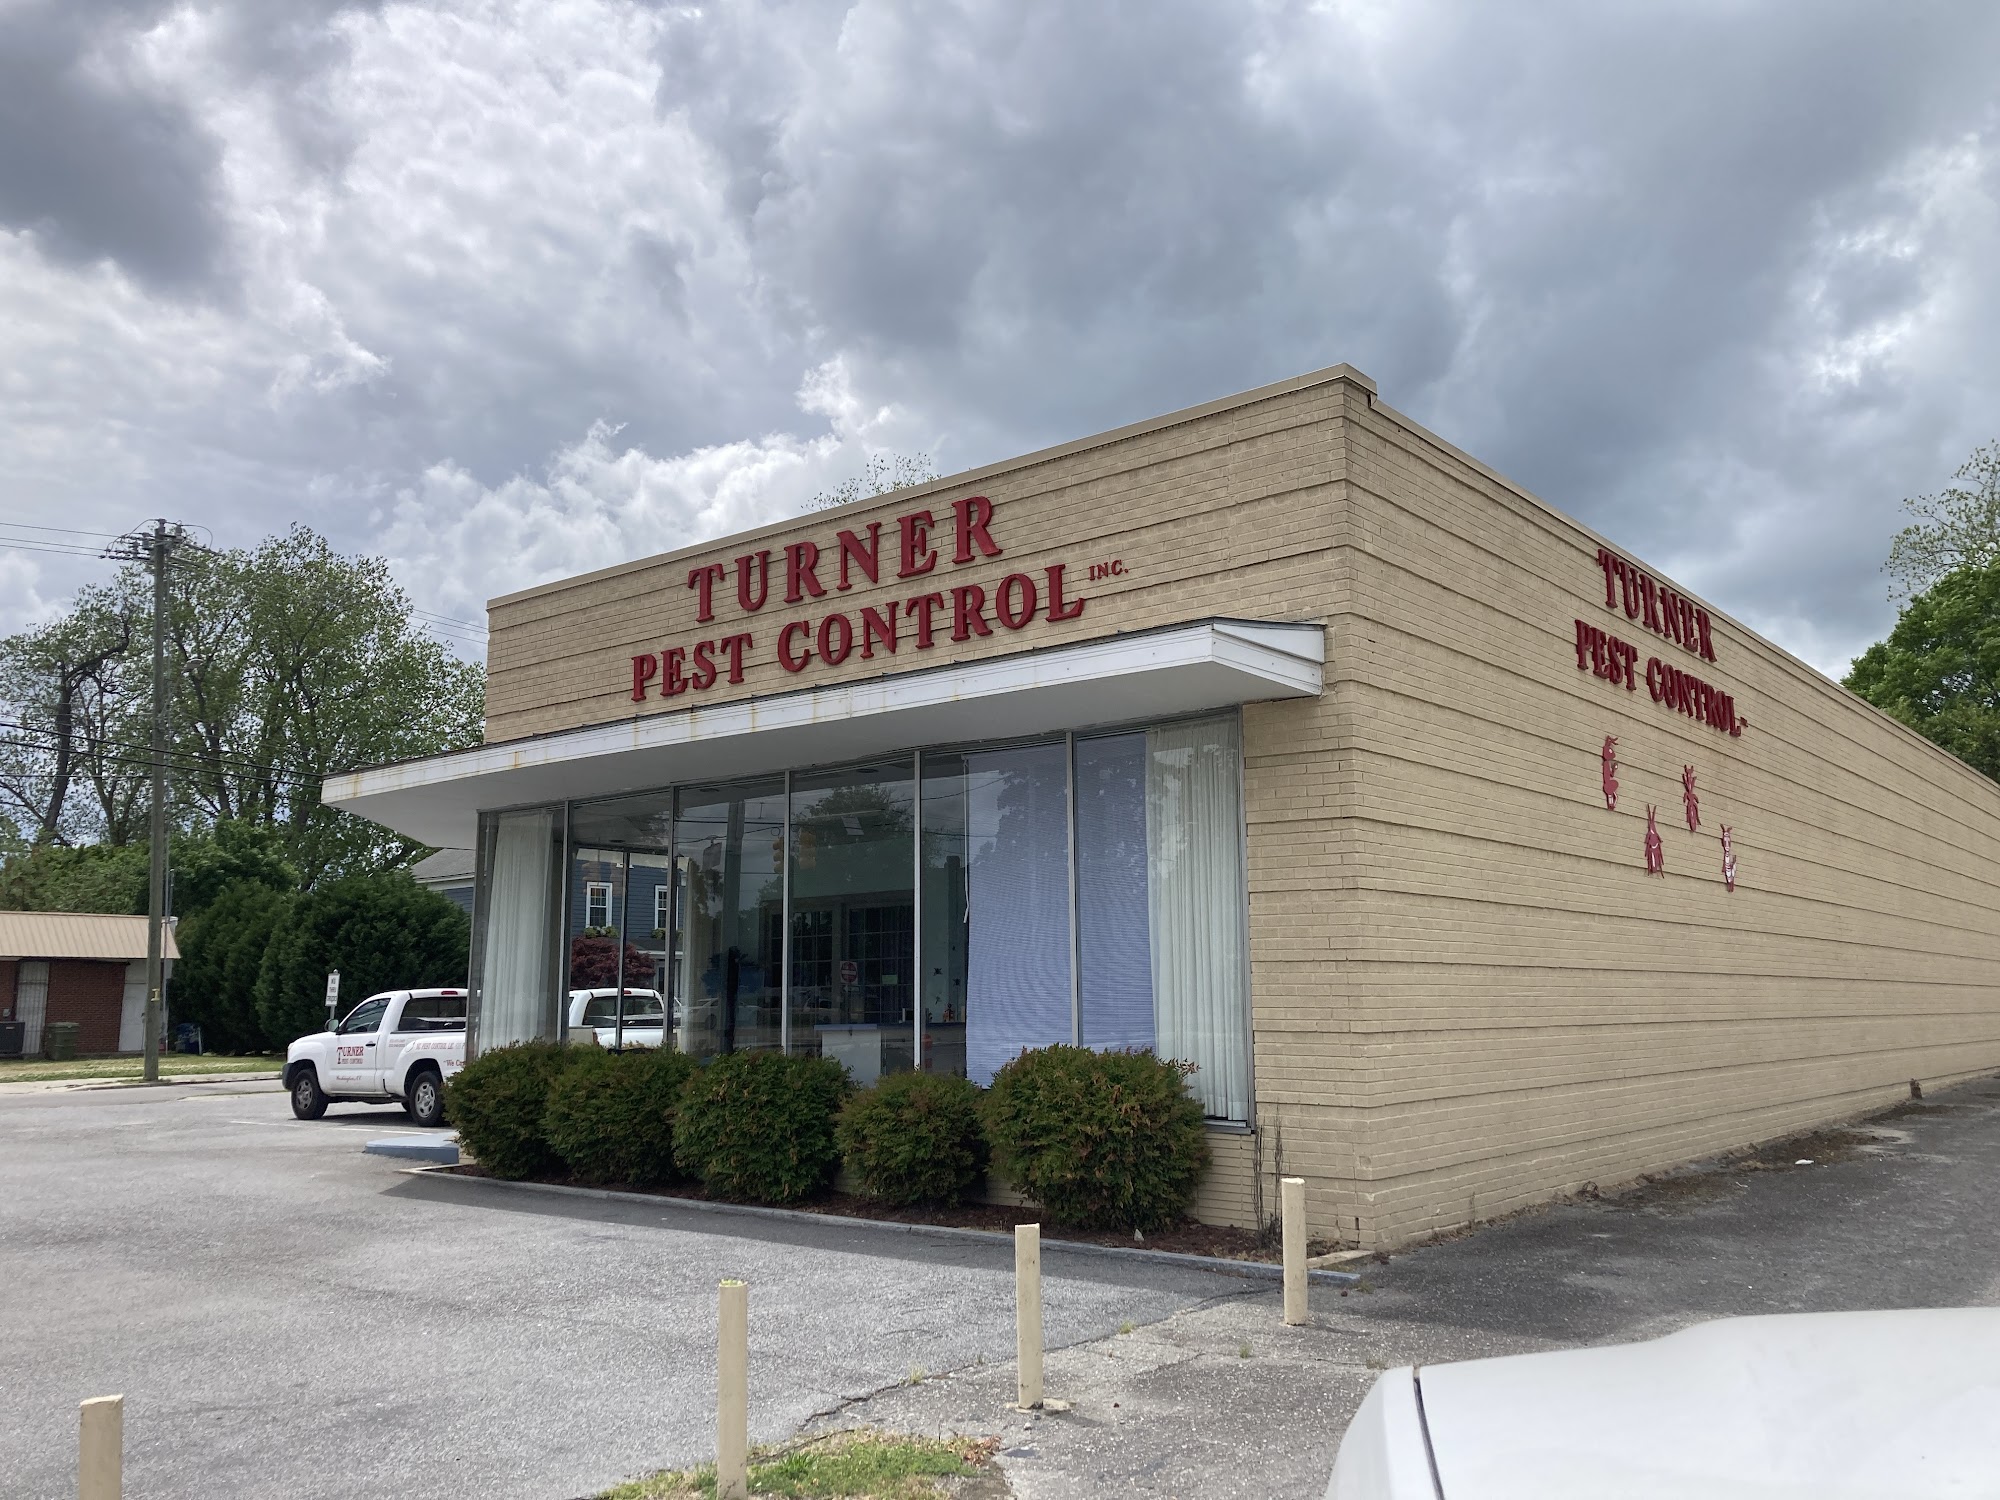 Turner Pest Control Inc